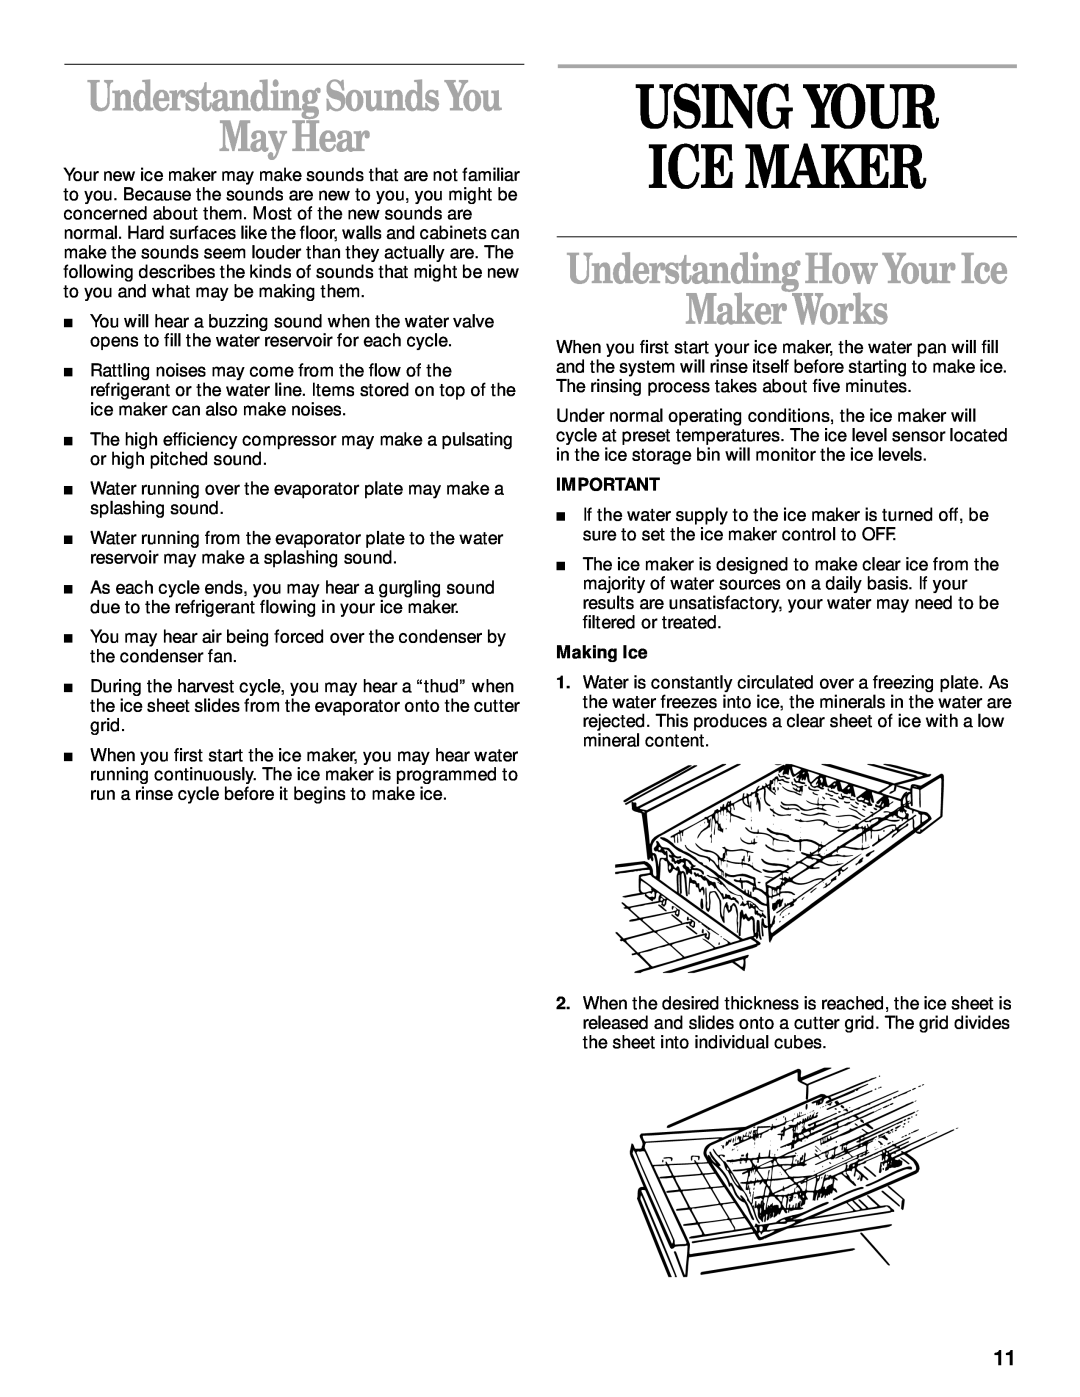 Whirlpool 2208357 Using Your Ice Maker, MayHear, UnderstandingHowYour Ice Maker Works, Understanding SoundsYou, Making Ice 